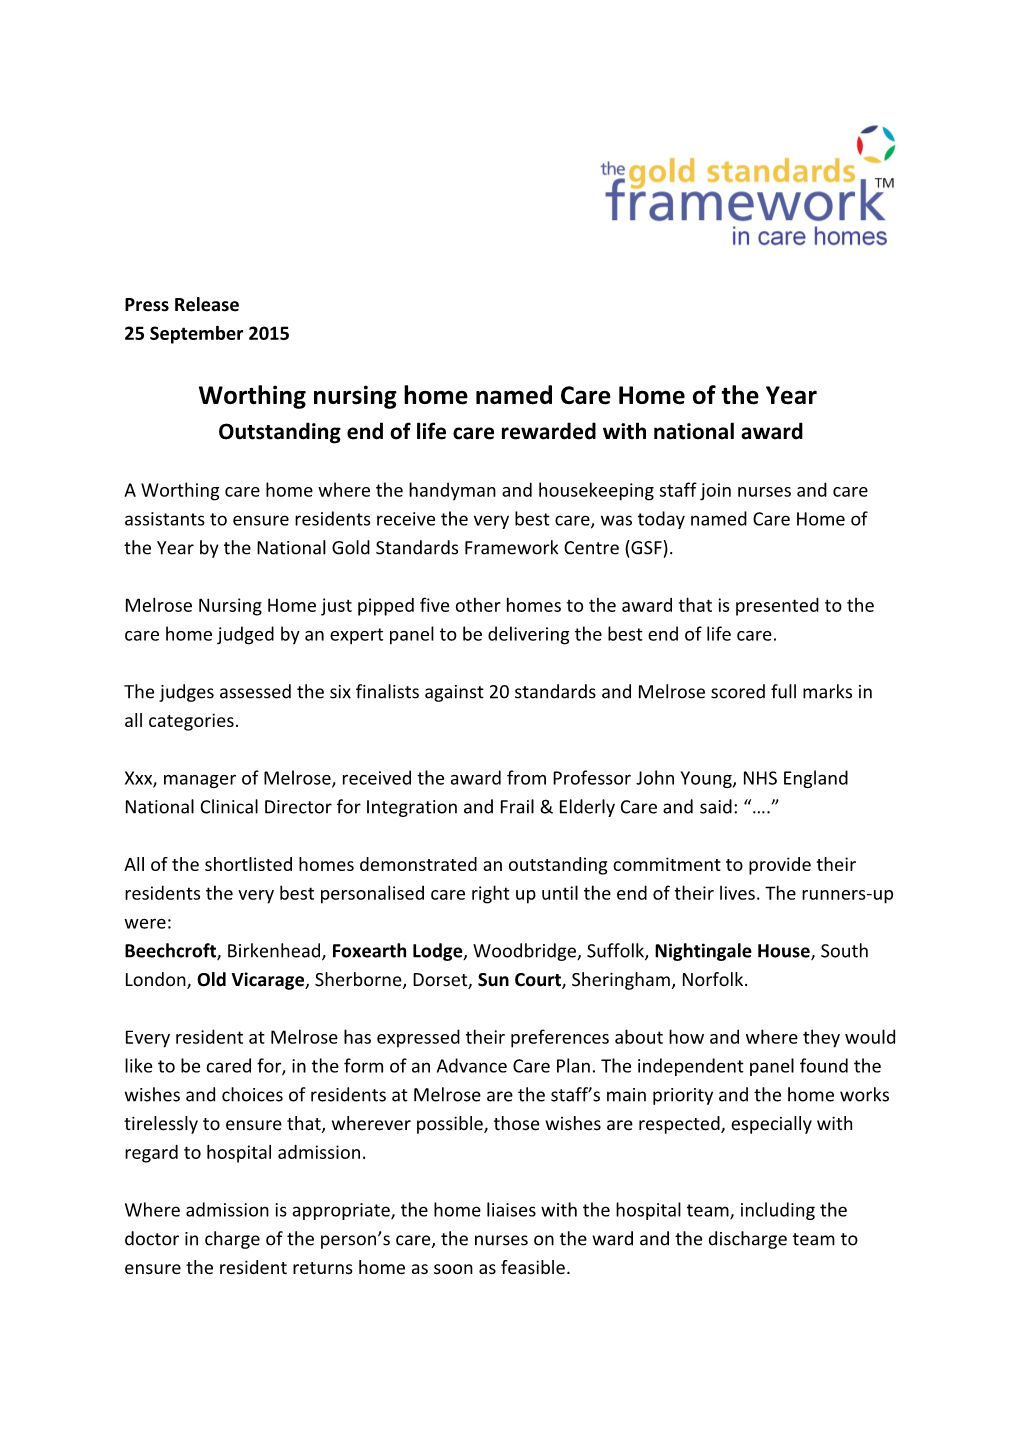 Worthingnursing Home Named Care Home of the Year